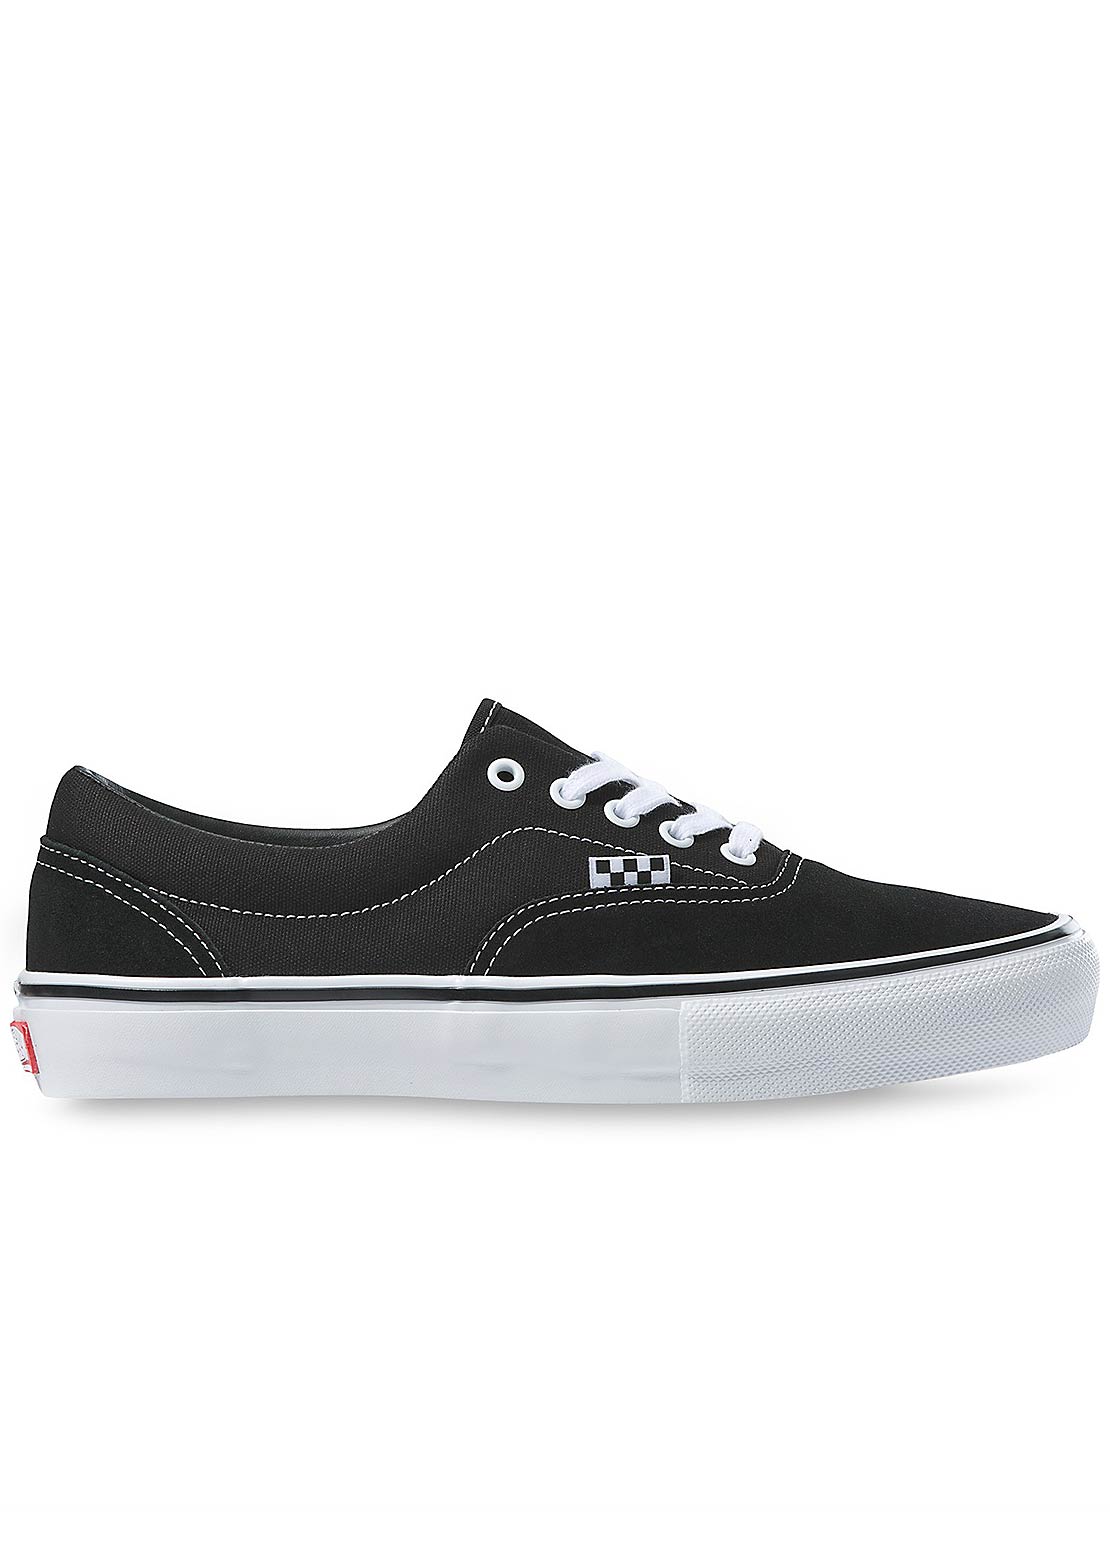 Vans Skate Era Shoes Black/White